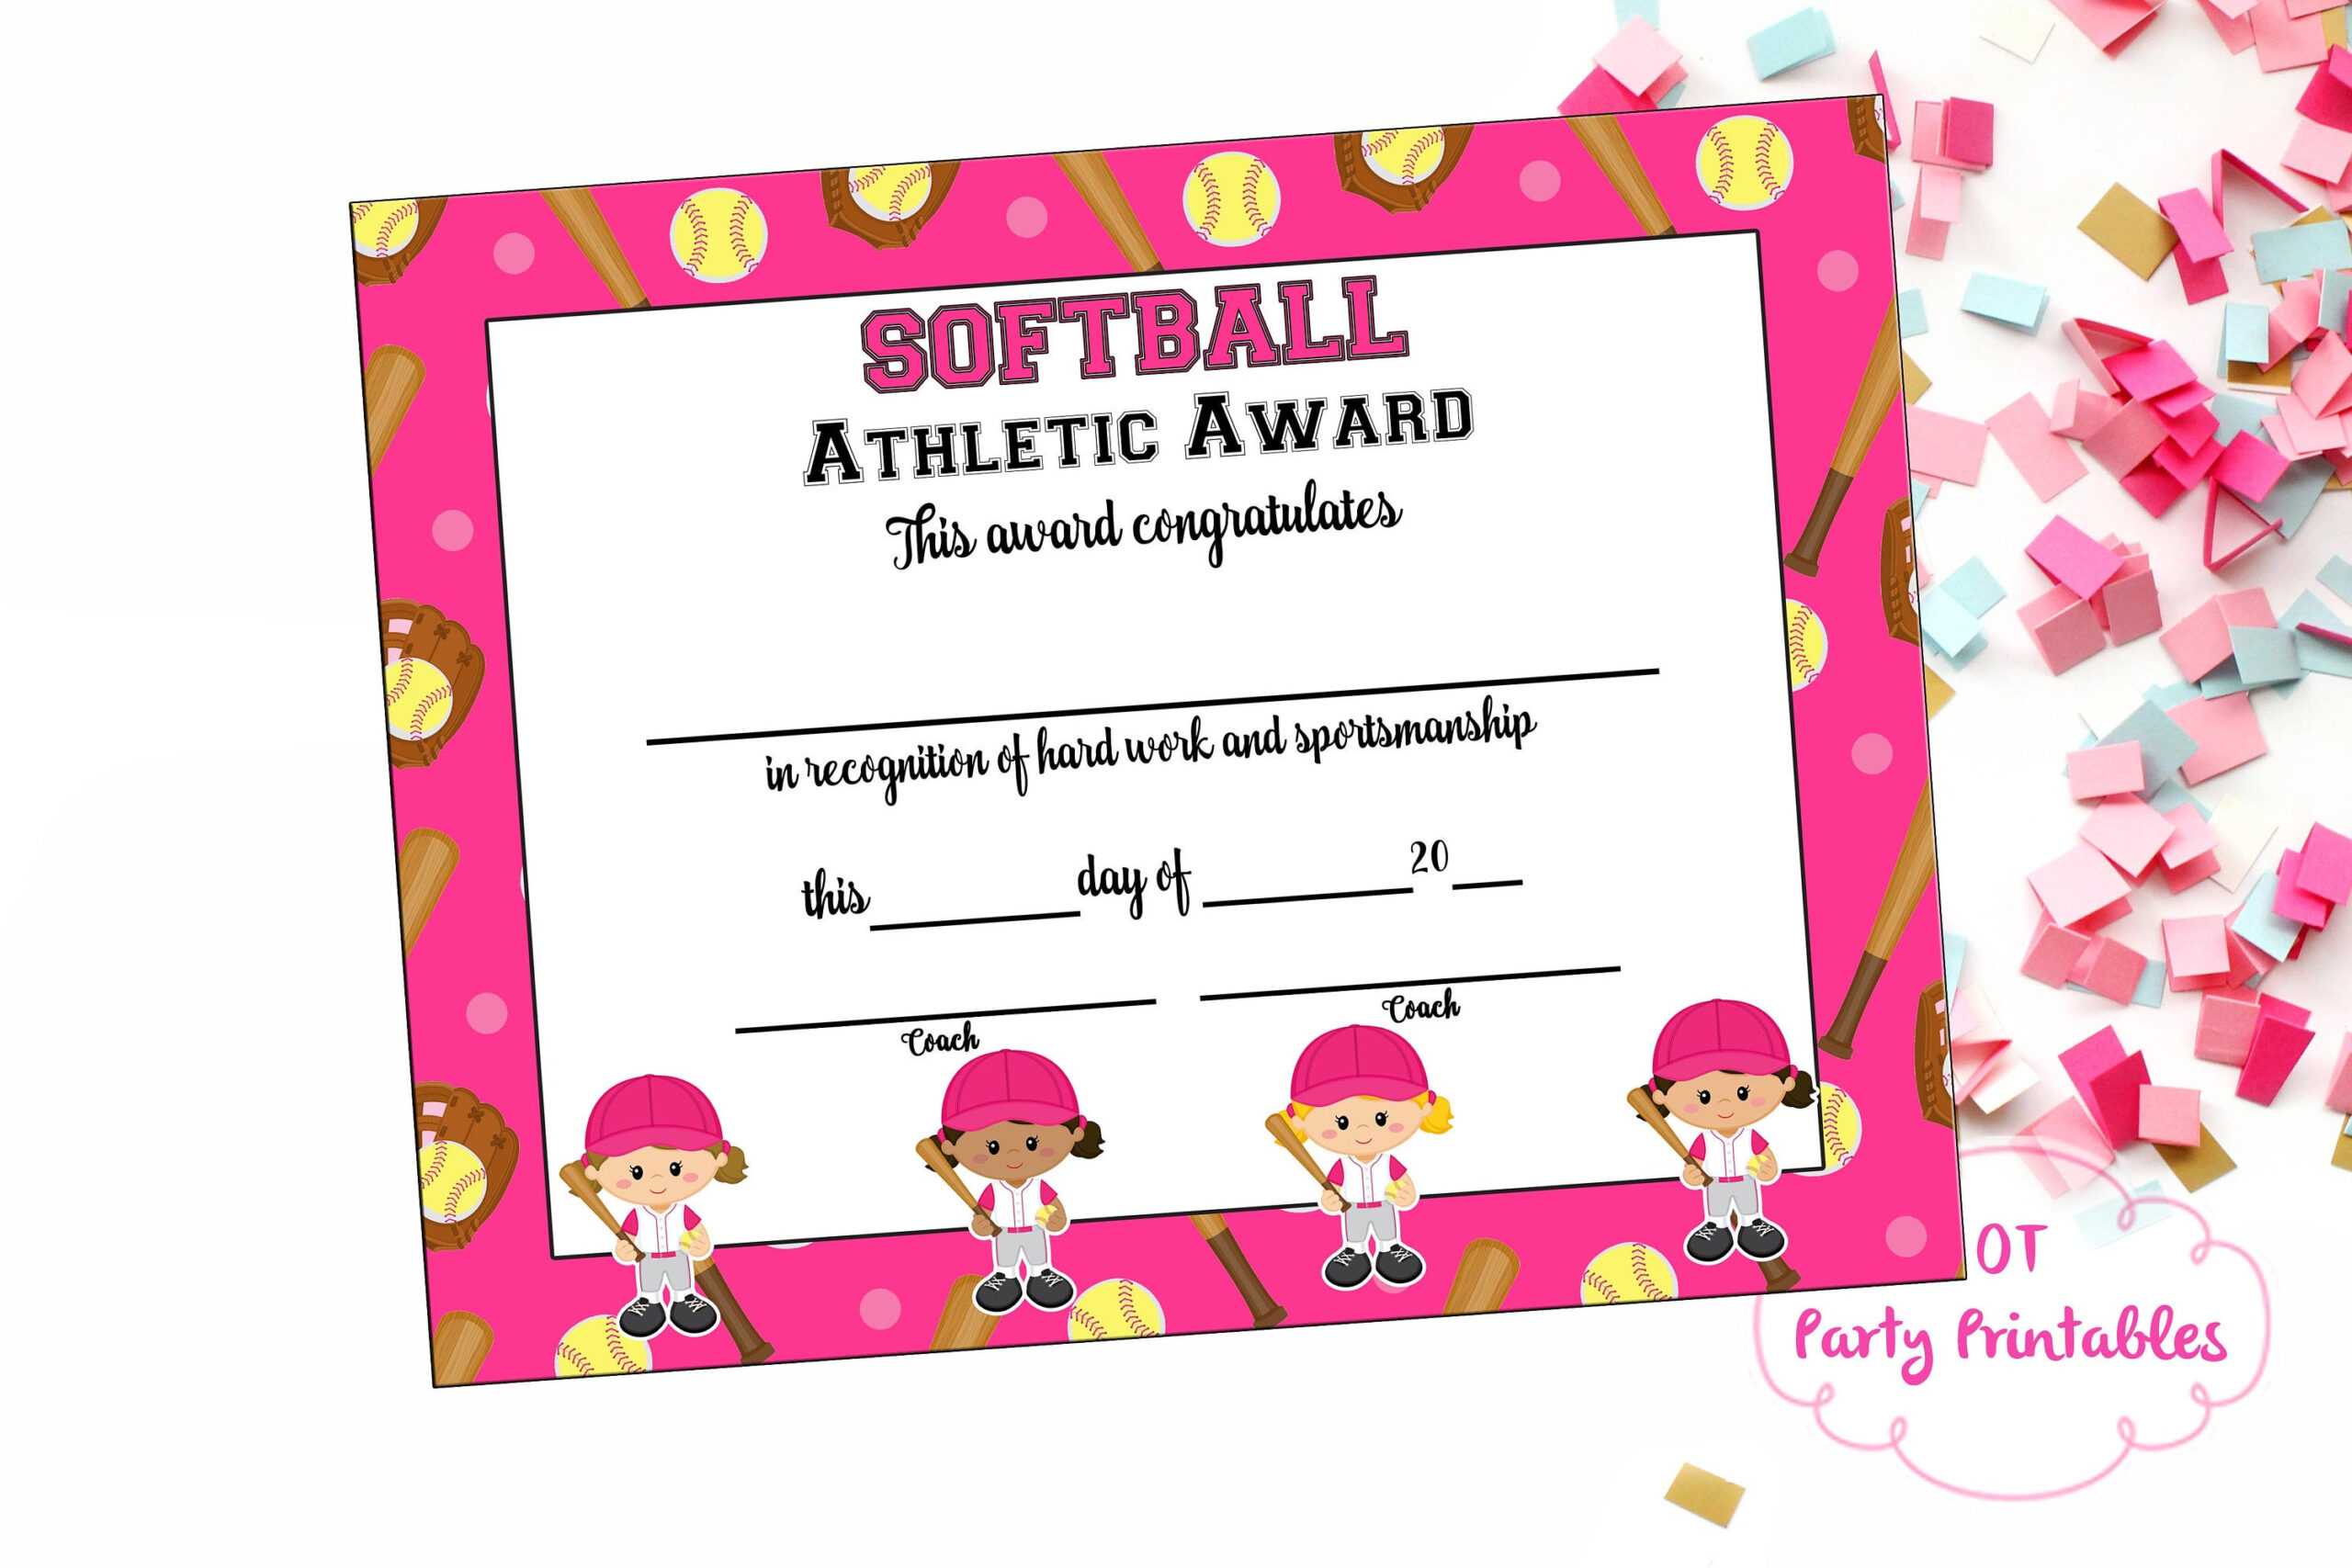 Softball Certificate Of Achievement – Softball Award – Print At Home –  Softball Mvp – Softball Certificate Of Completion – Sports Award For Softball Award Certificate Template